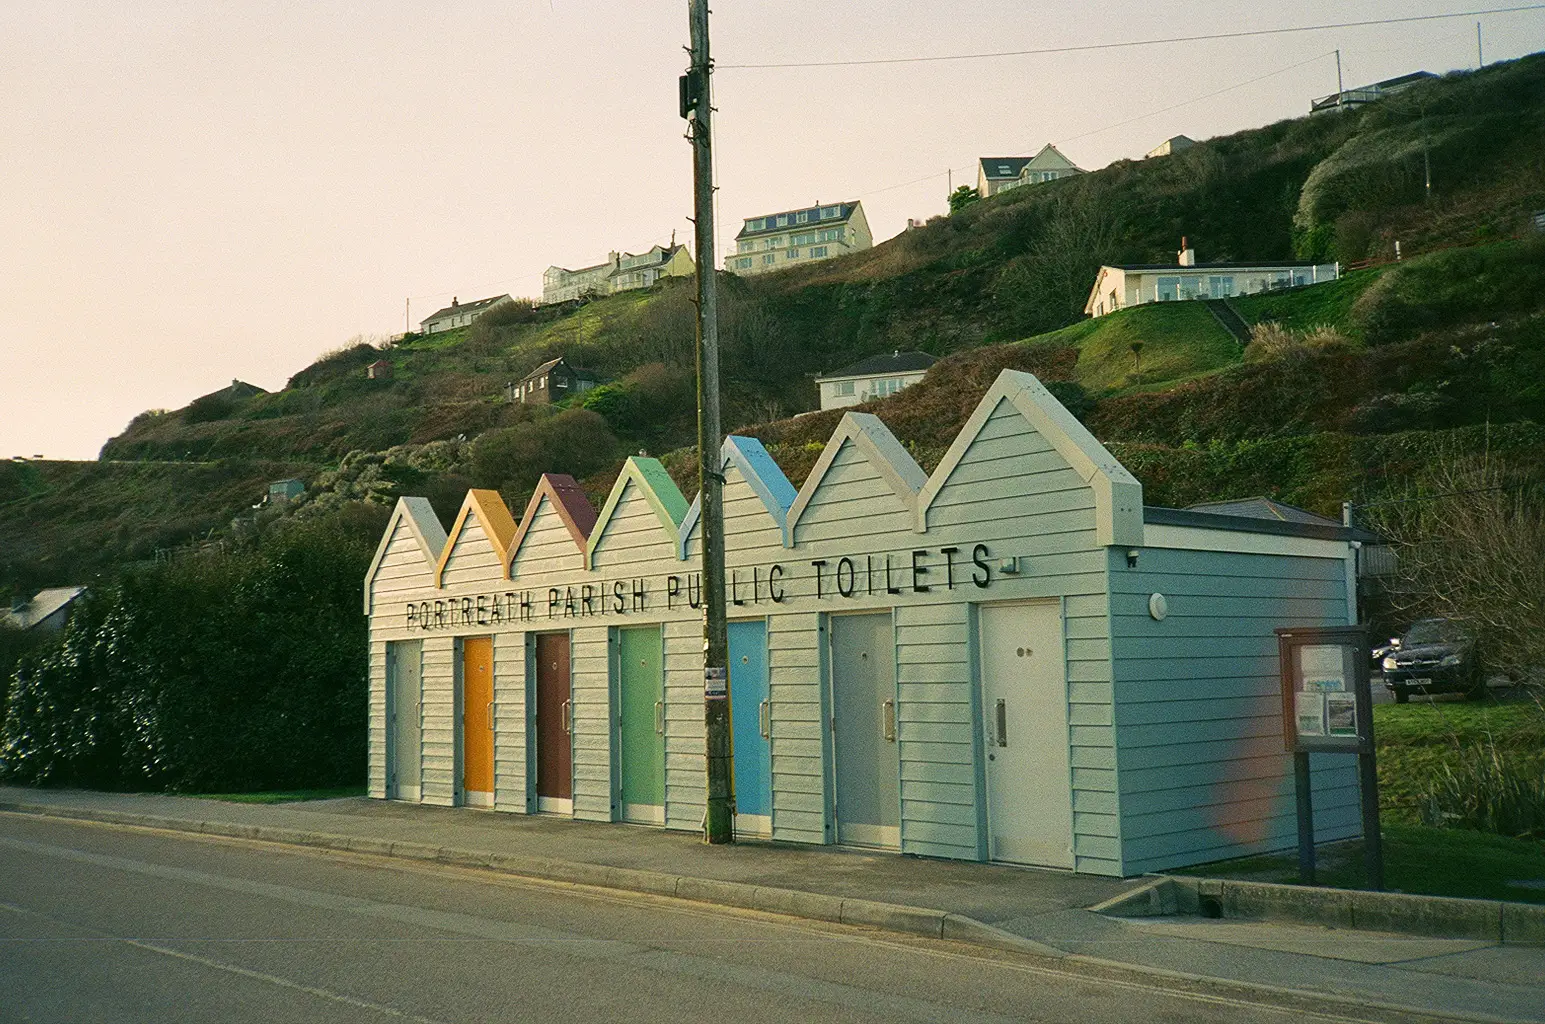 Portreath Cornwall station and toilets